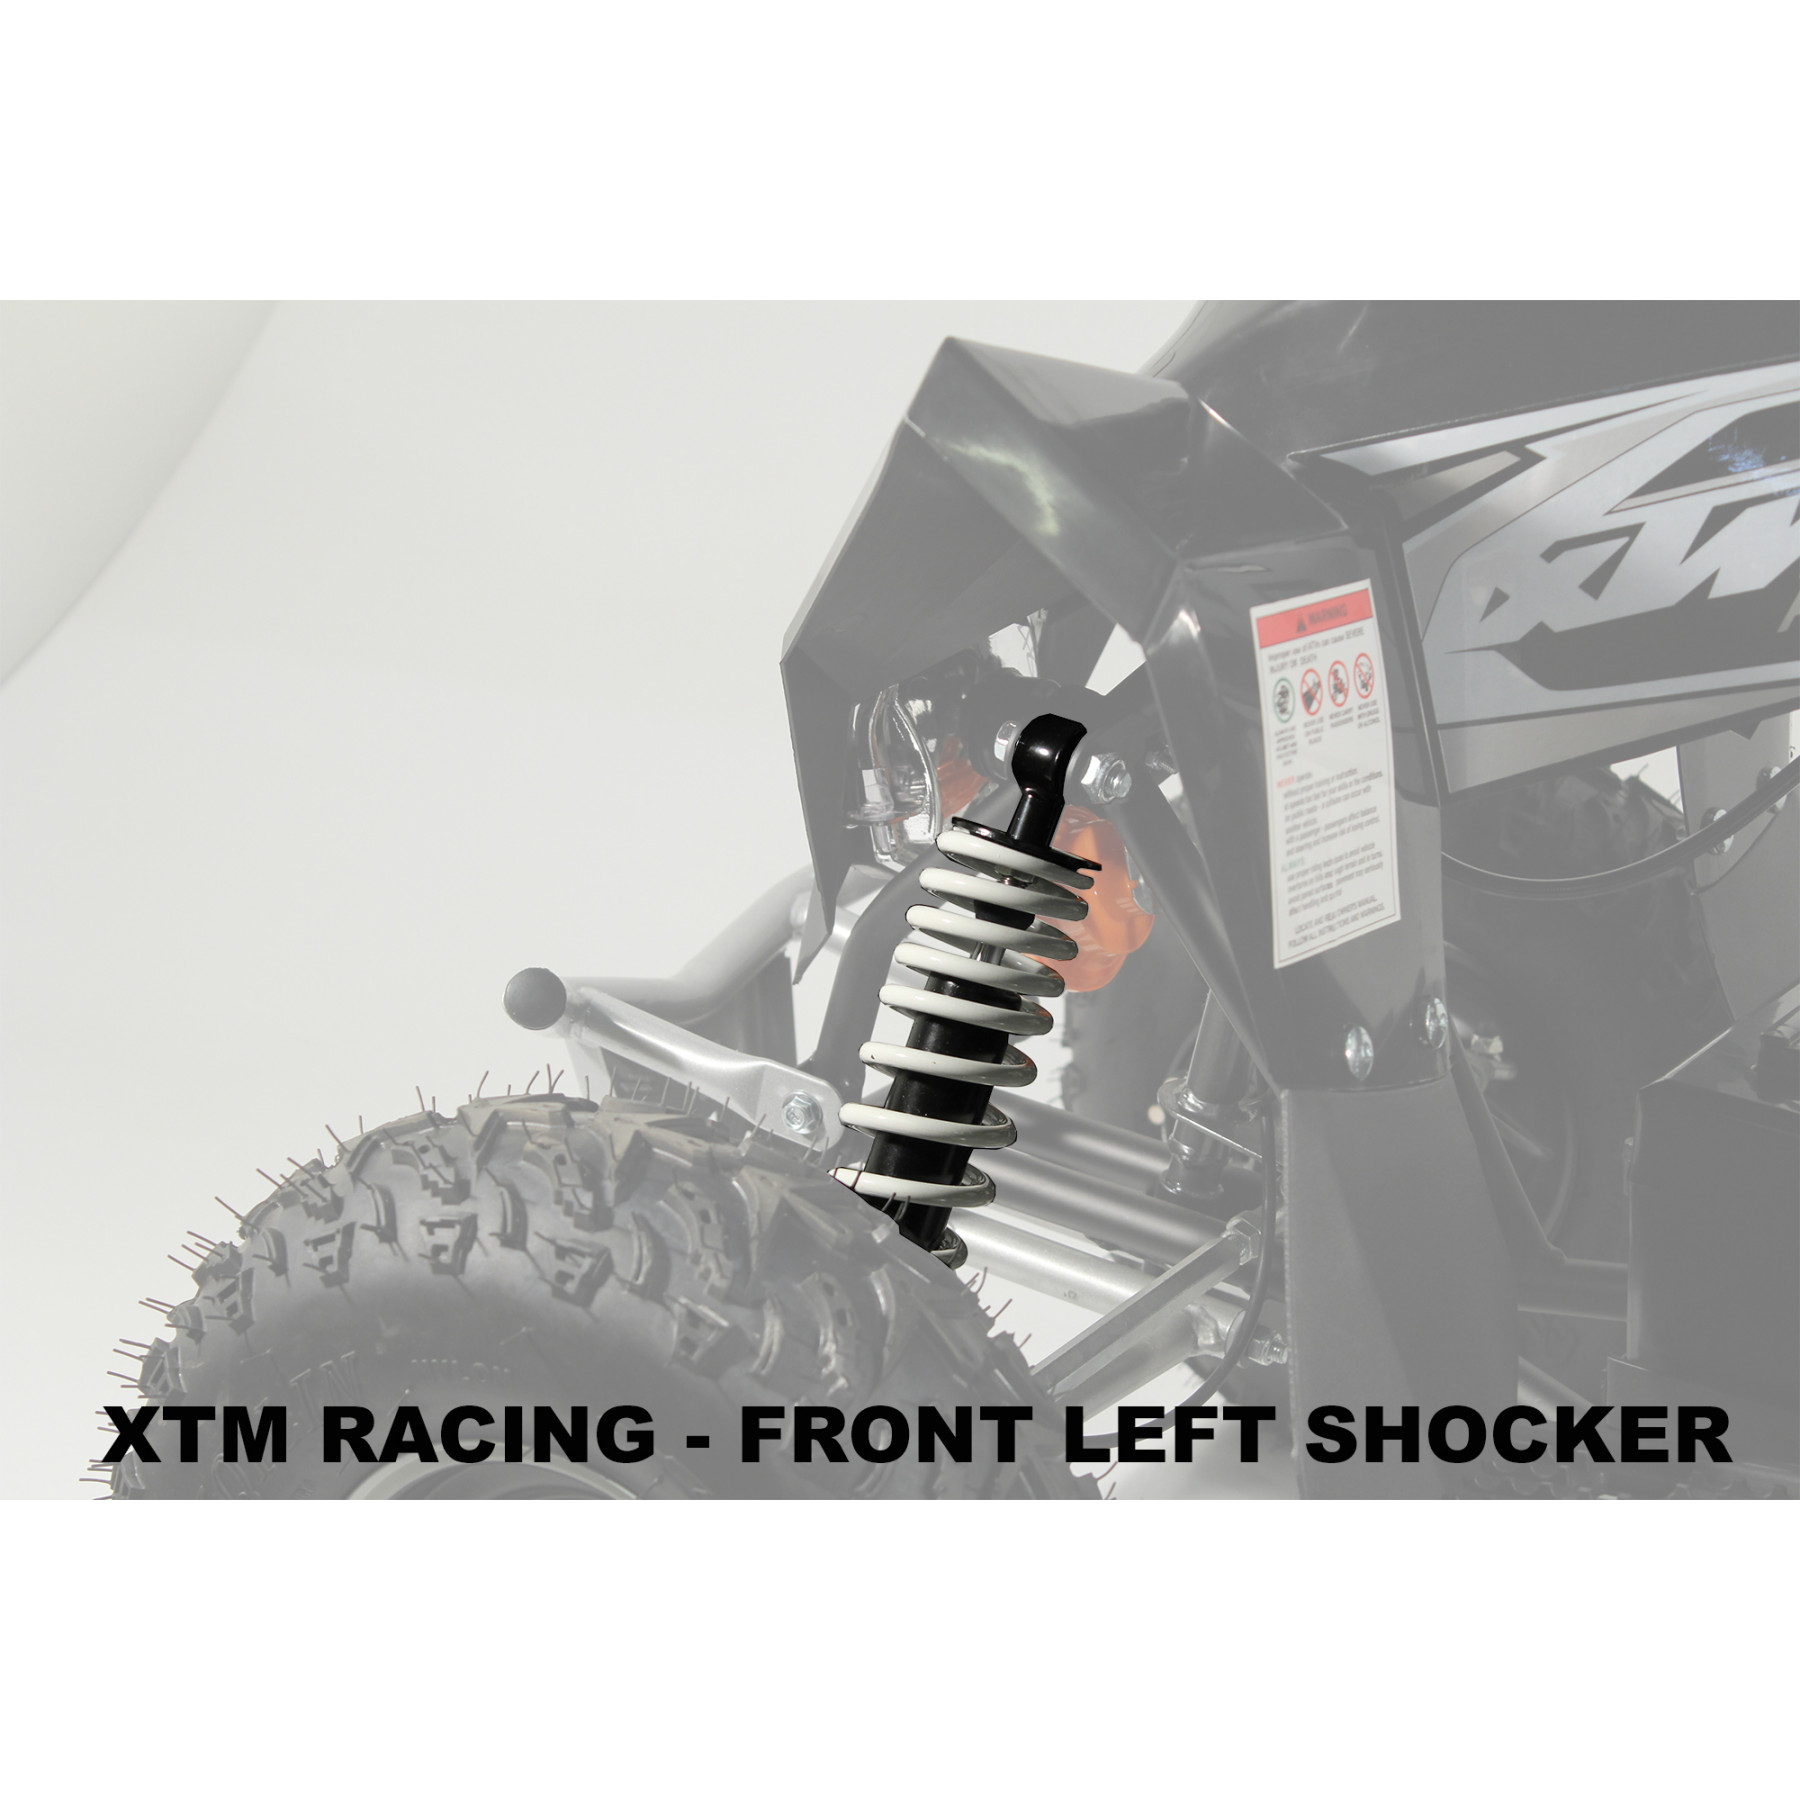 XTM RACING QUAD COMPLETE NEAR SIDE FRONT LEFT SHOCKER